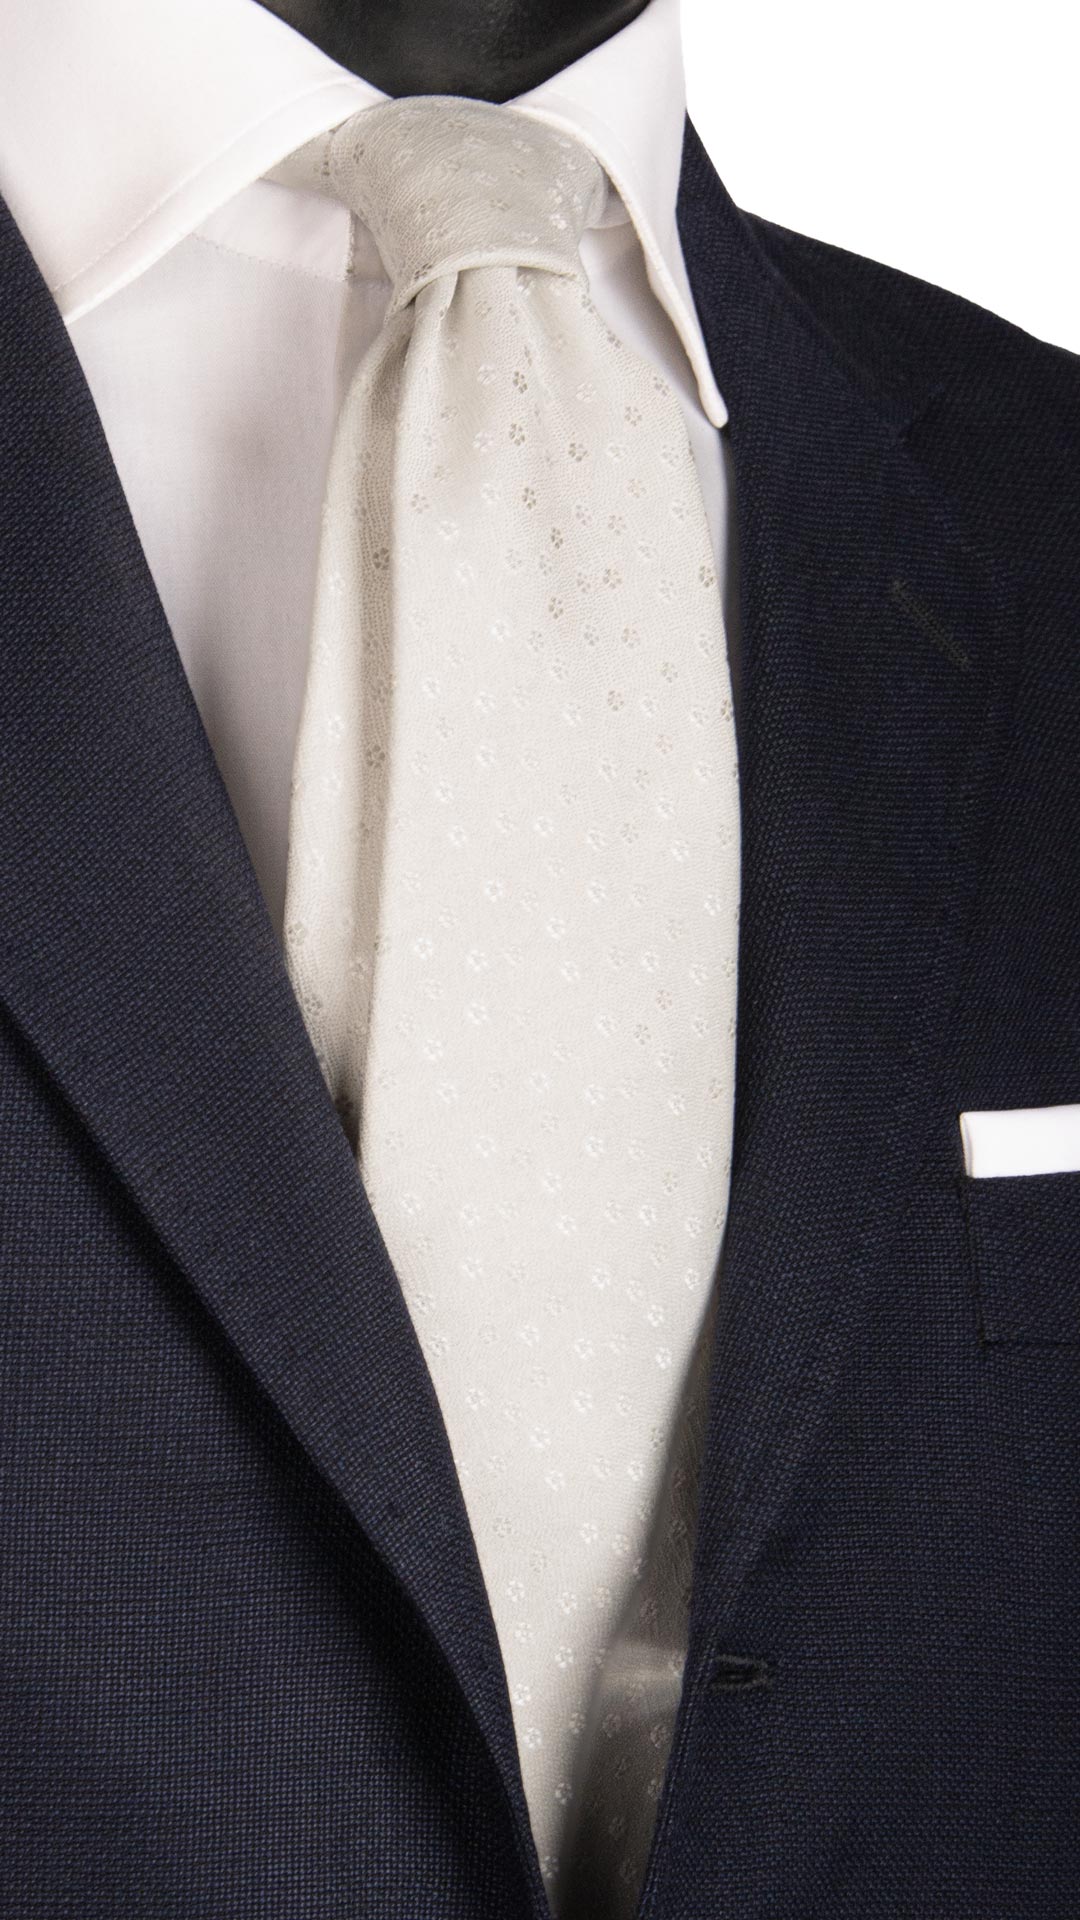 Cravatta da Cerimonia di Seta Bianco Perla Cangiante a Fiori Grigi Made in Italy Graffeo Cravatte